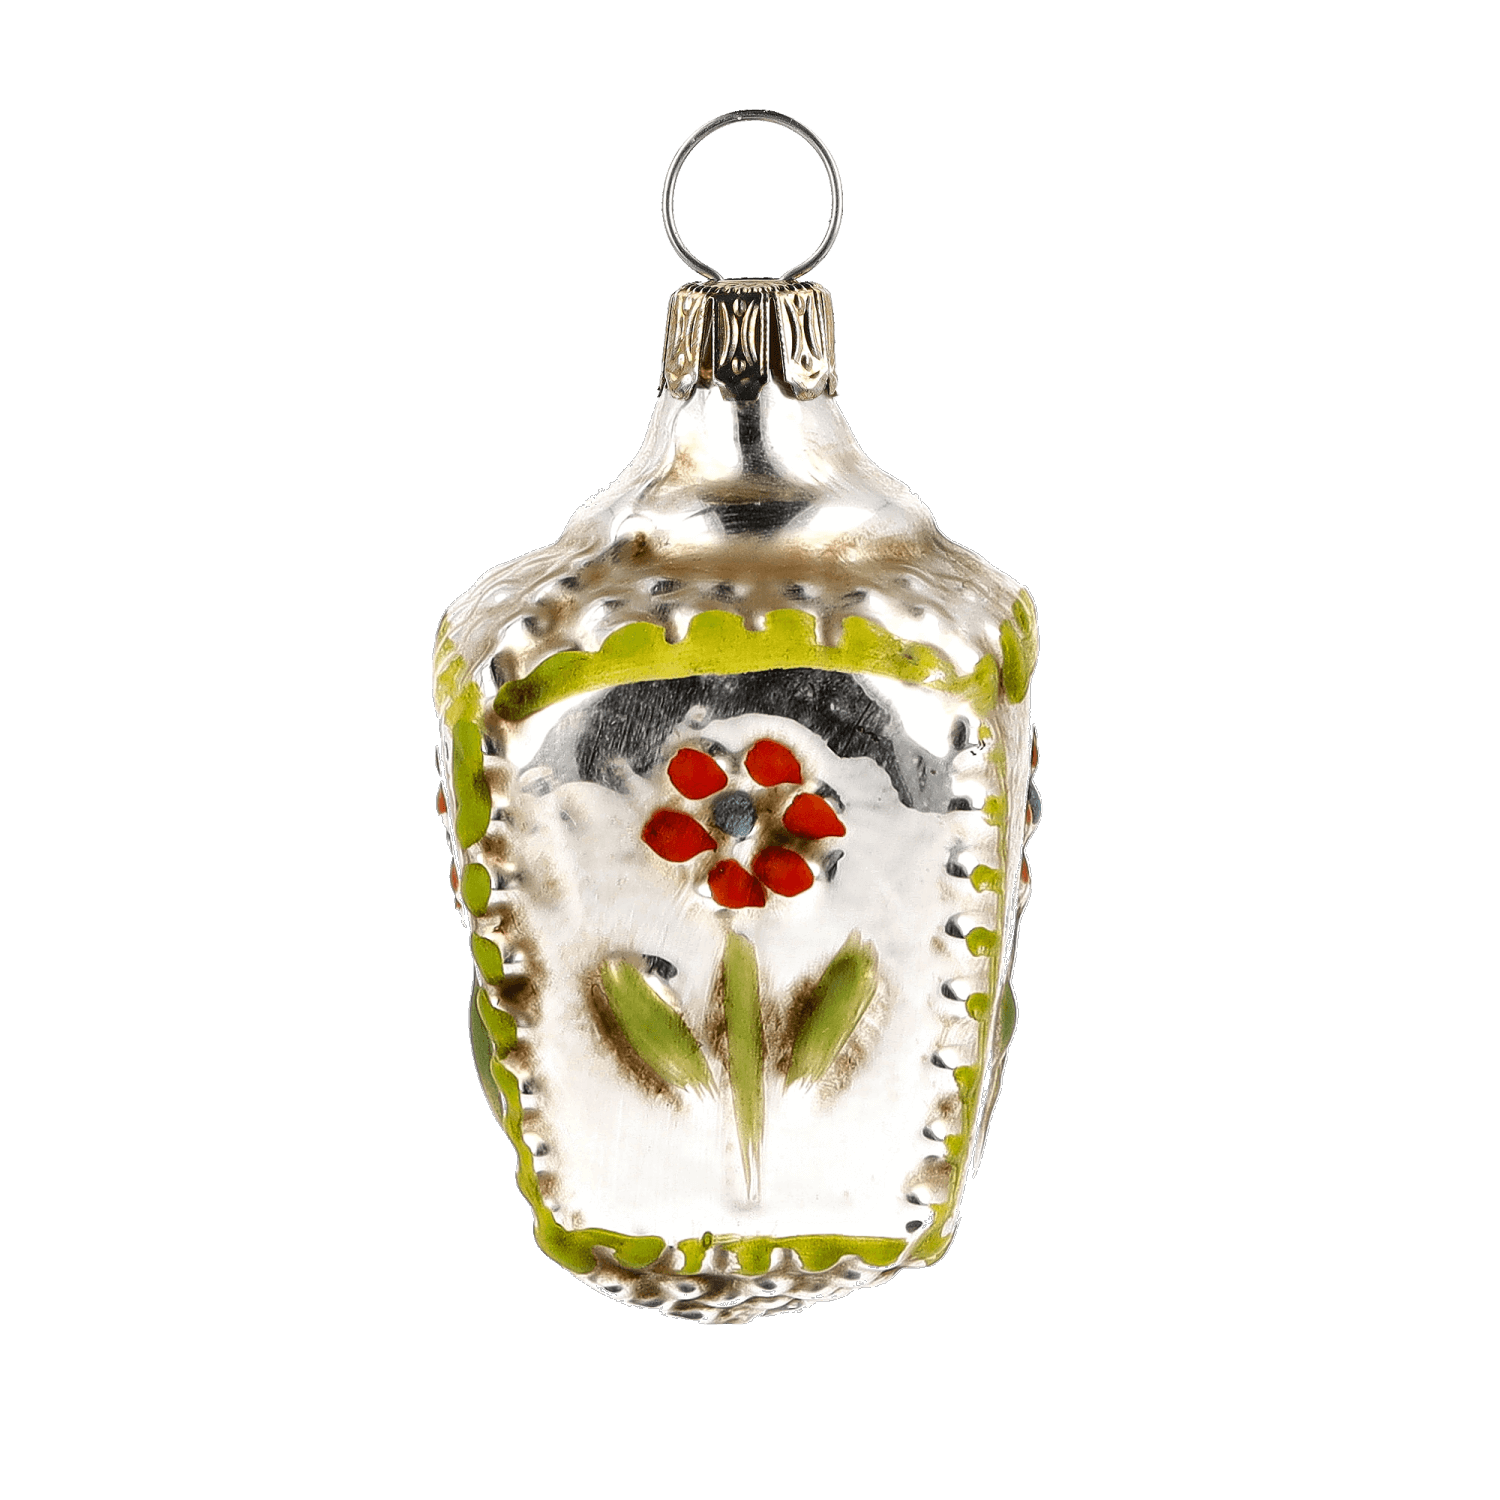 MAROLIN® - Miniature glass ornament "Basket with flowers"